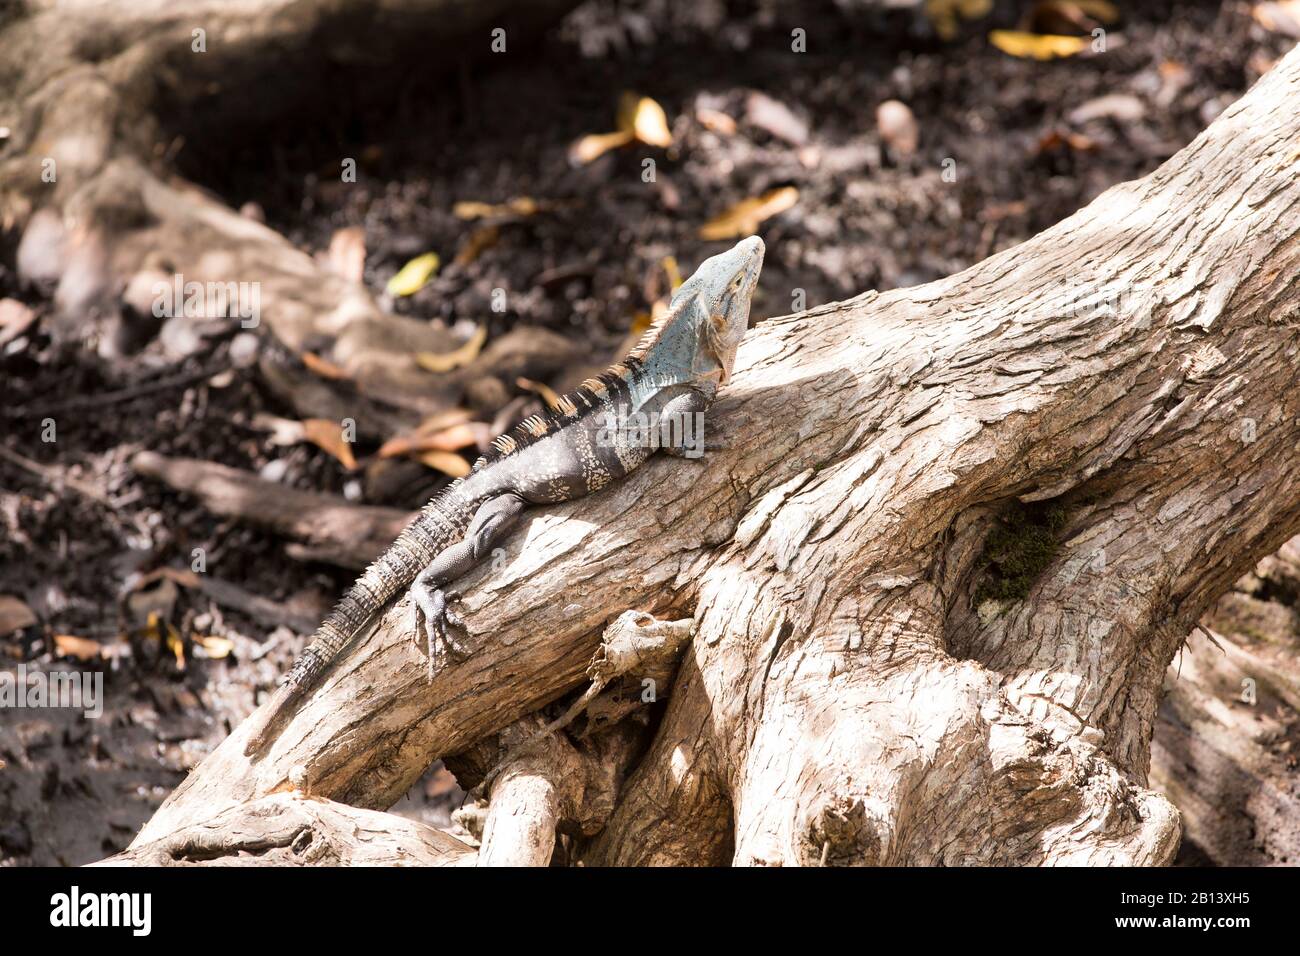 An iguana sunning on a log Stock Photo